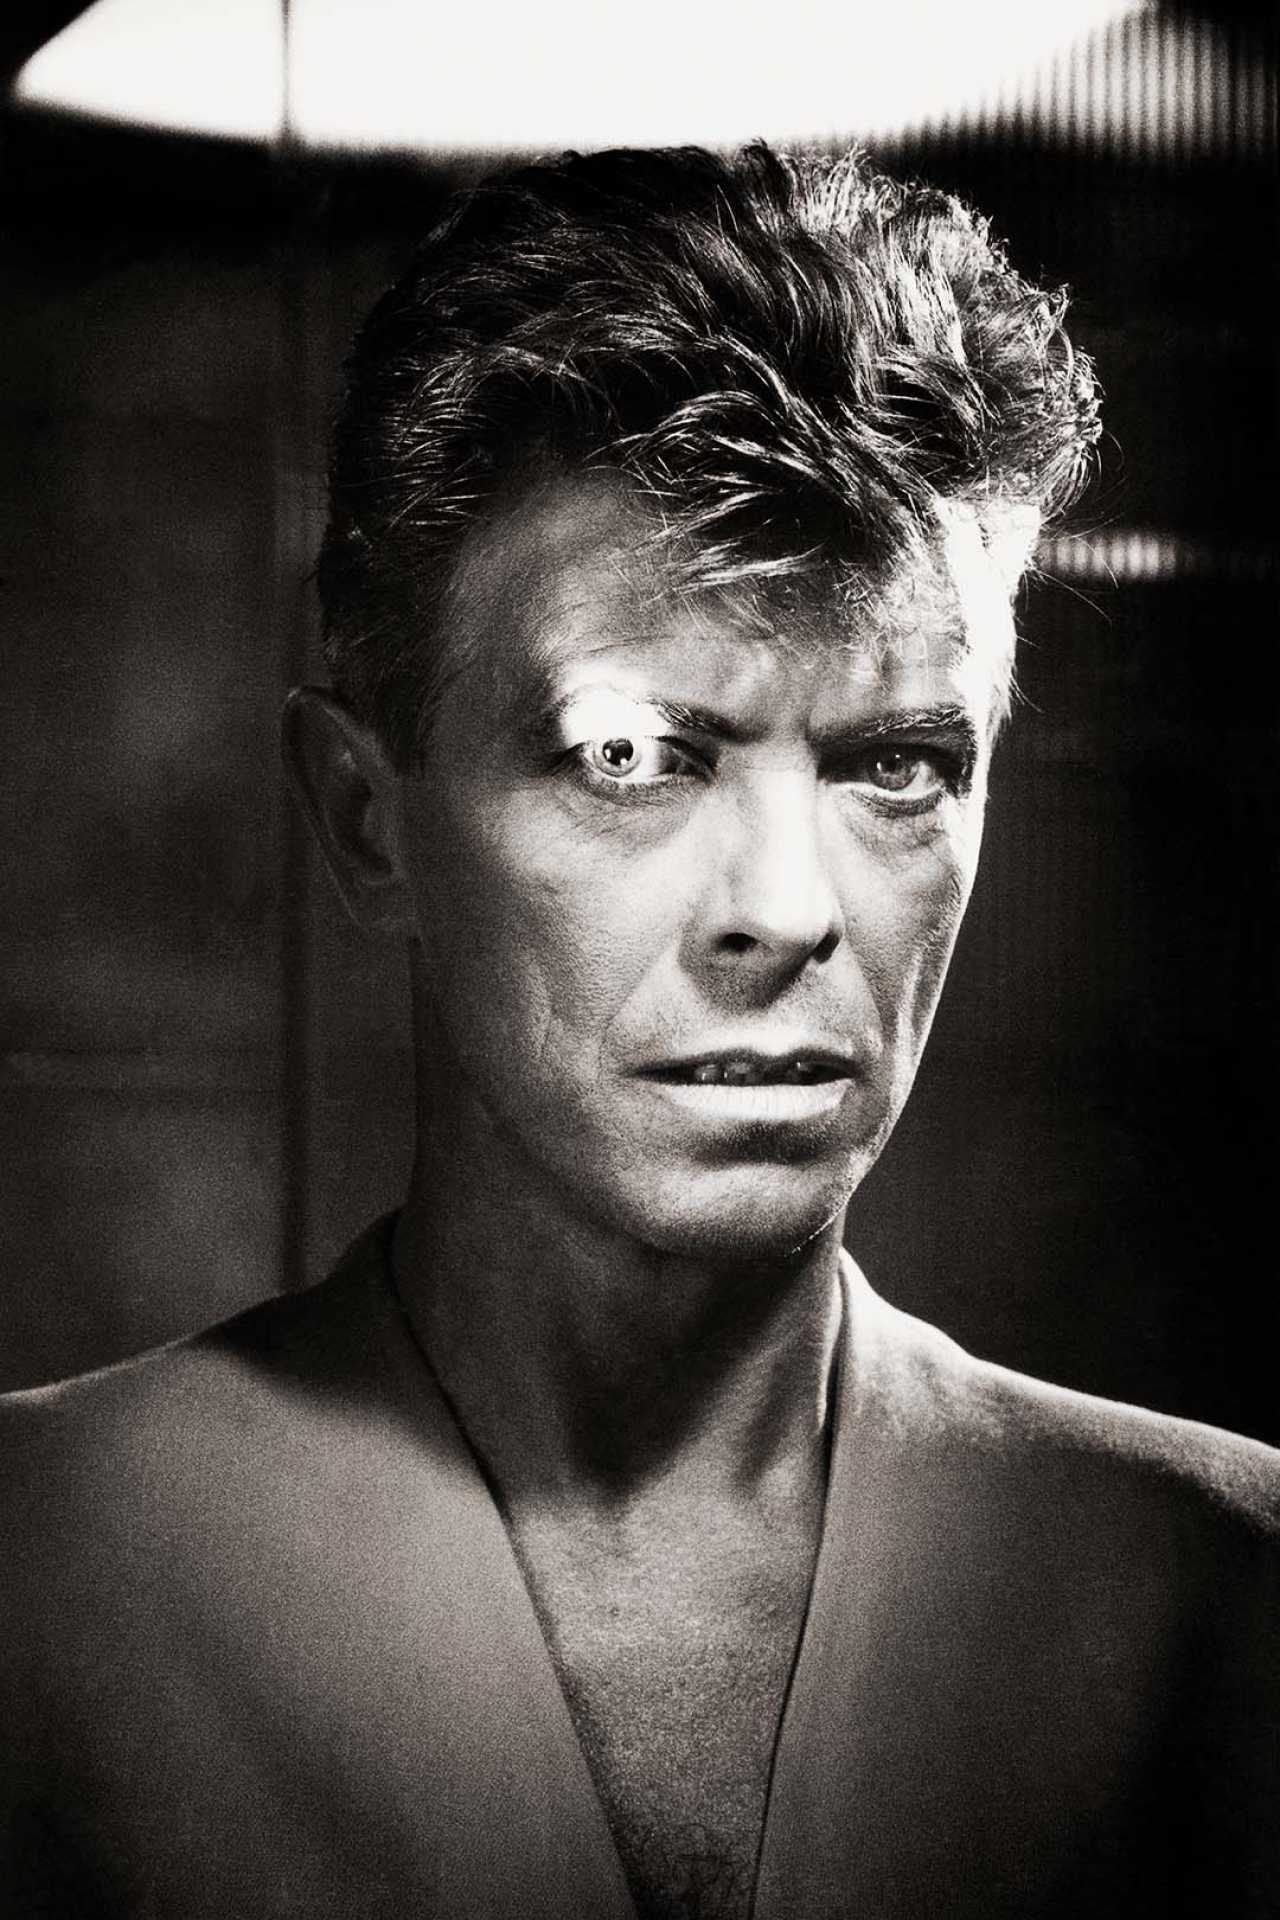 David Bowie by Brian Aris